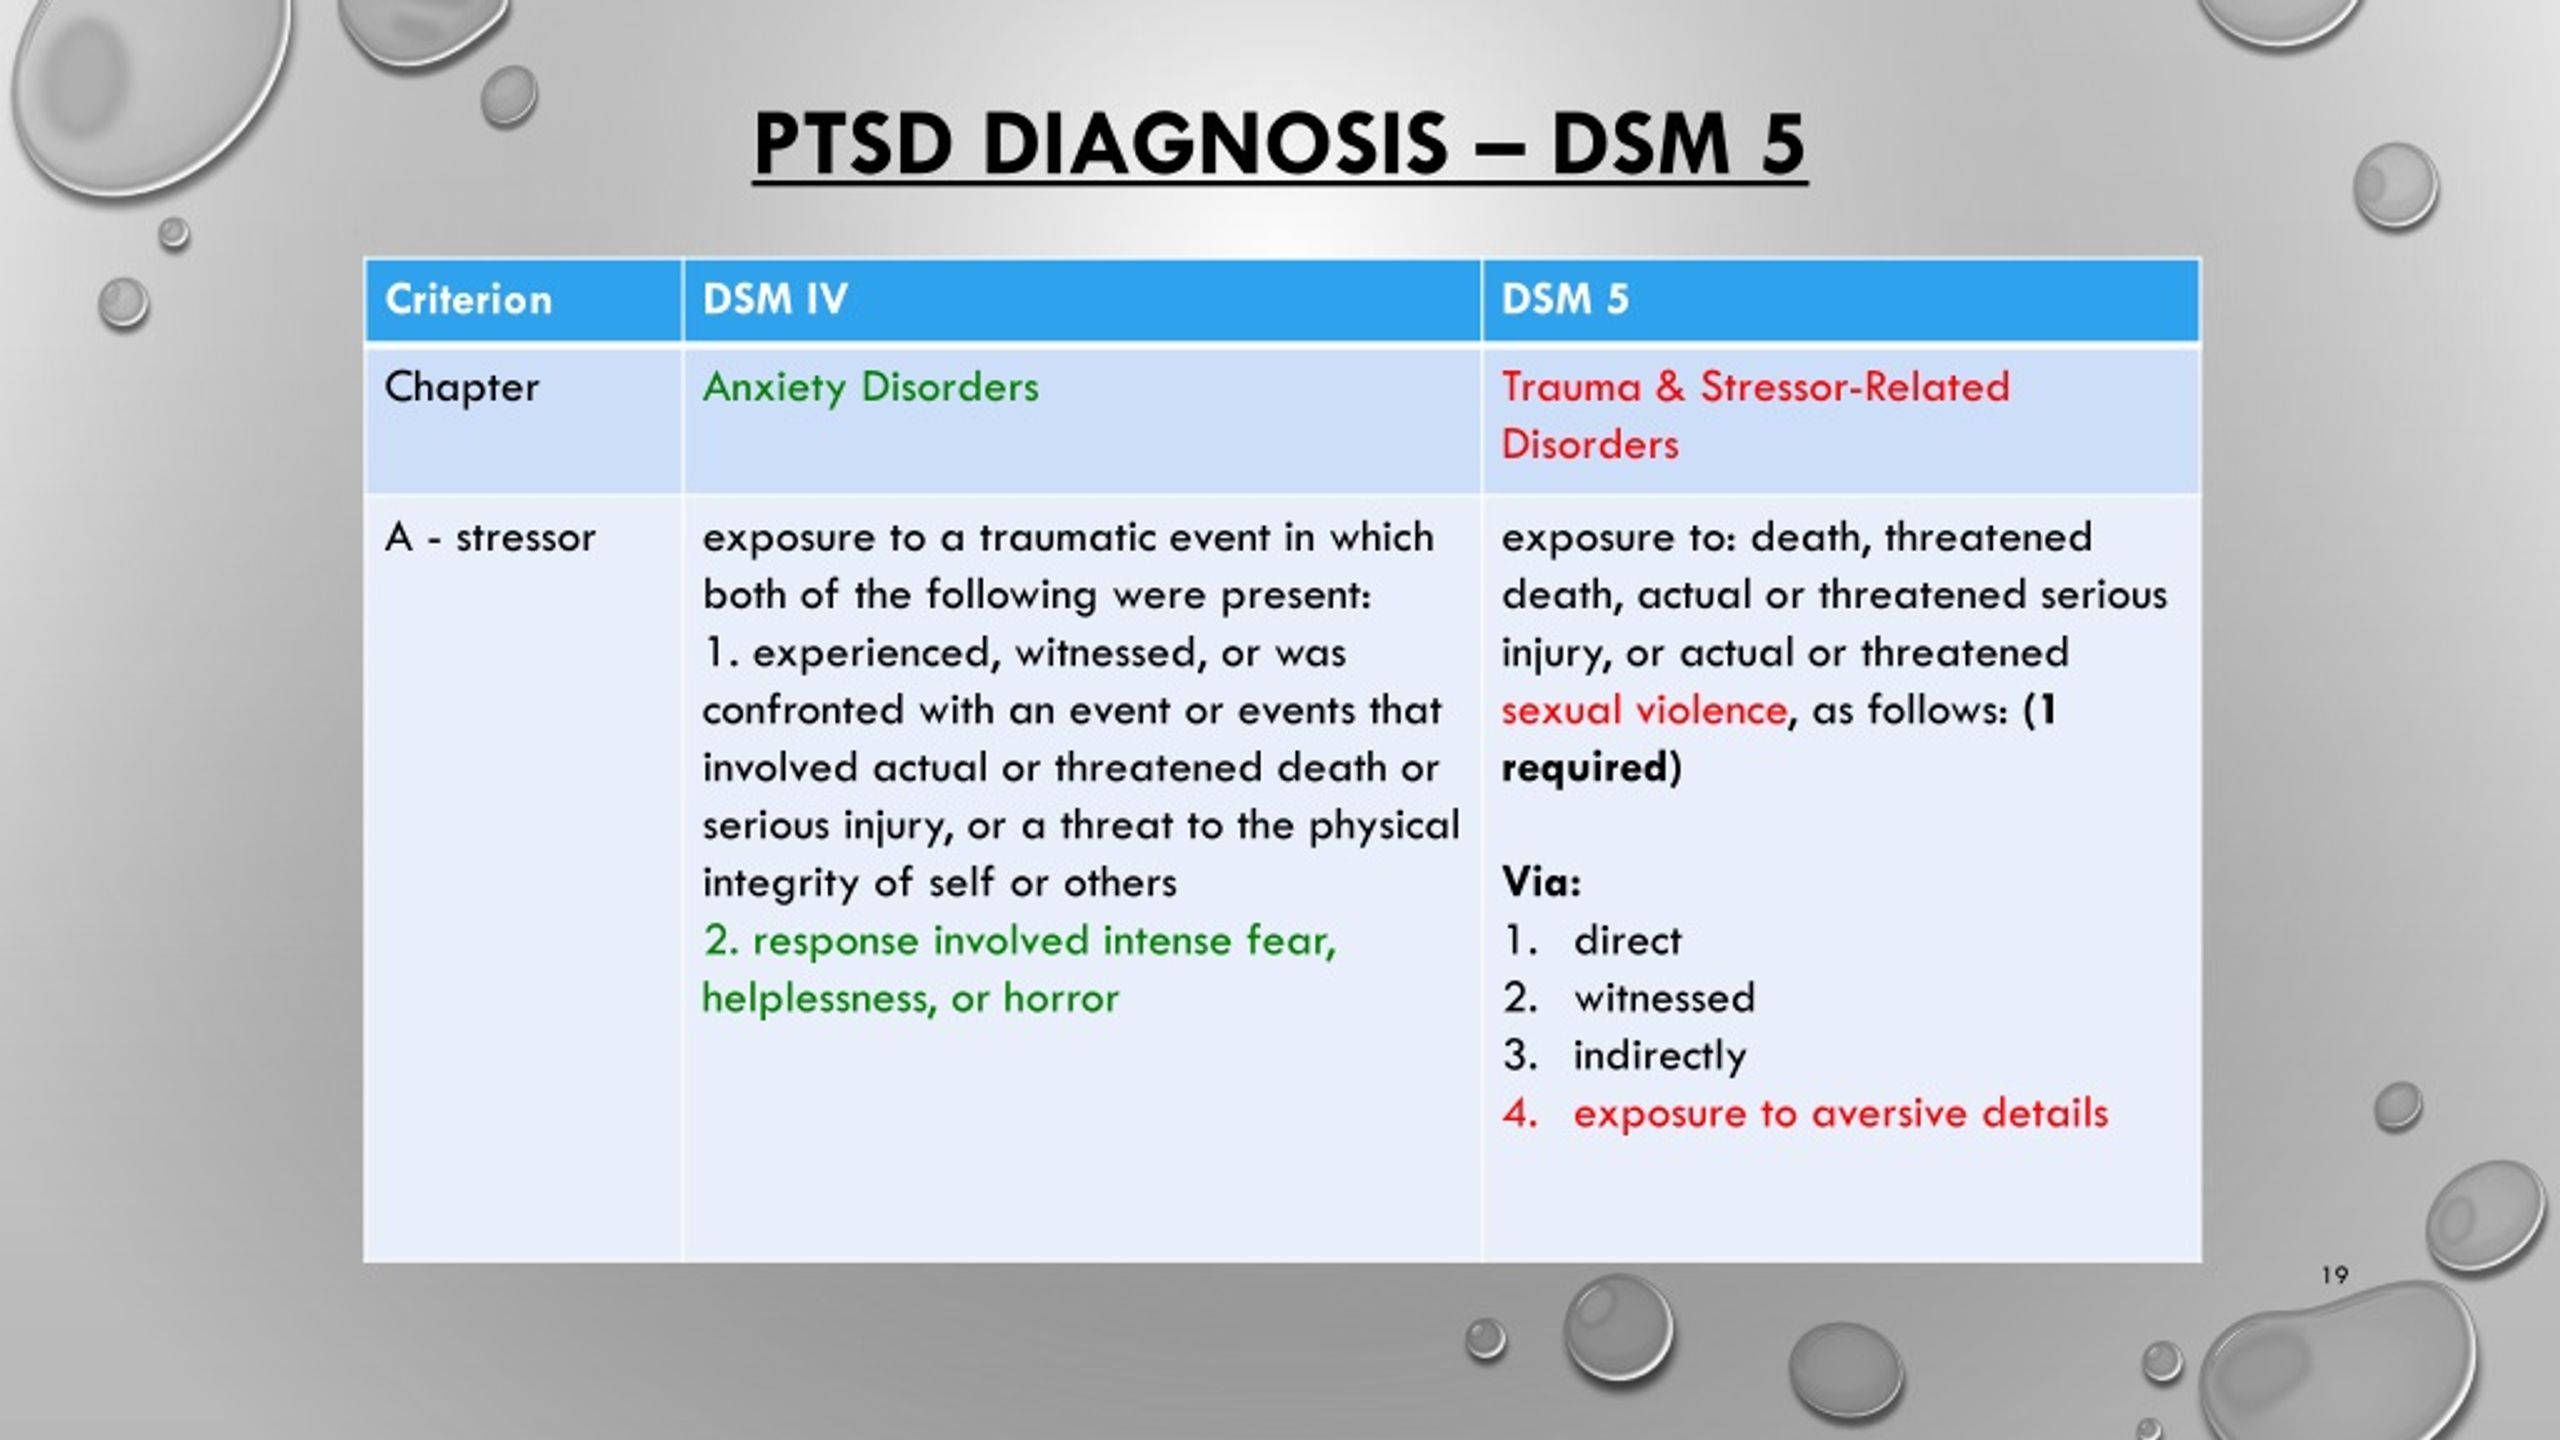 dsm 5 complex ptsd criteria